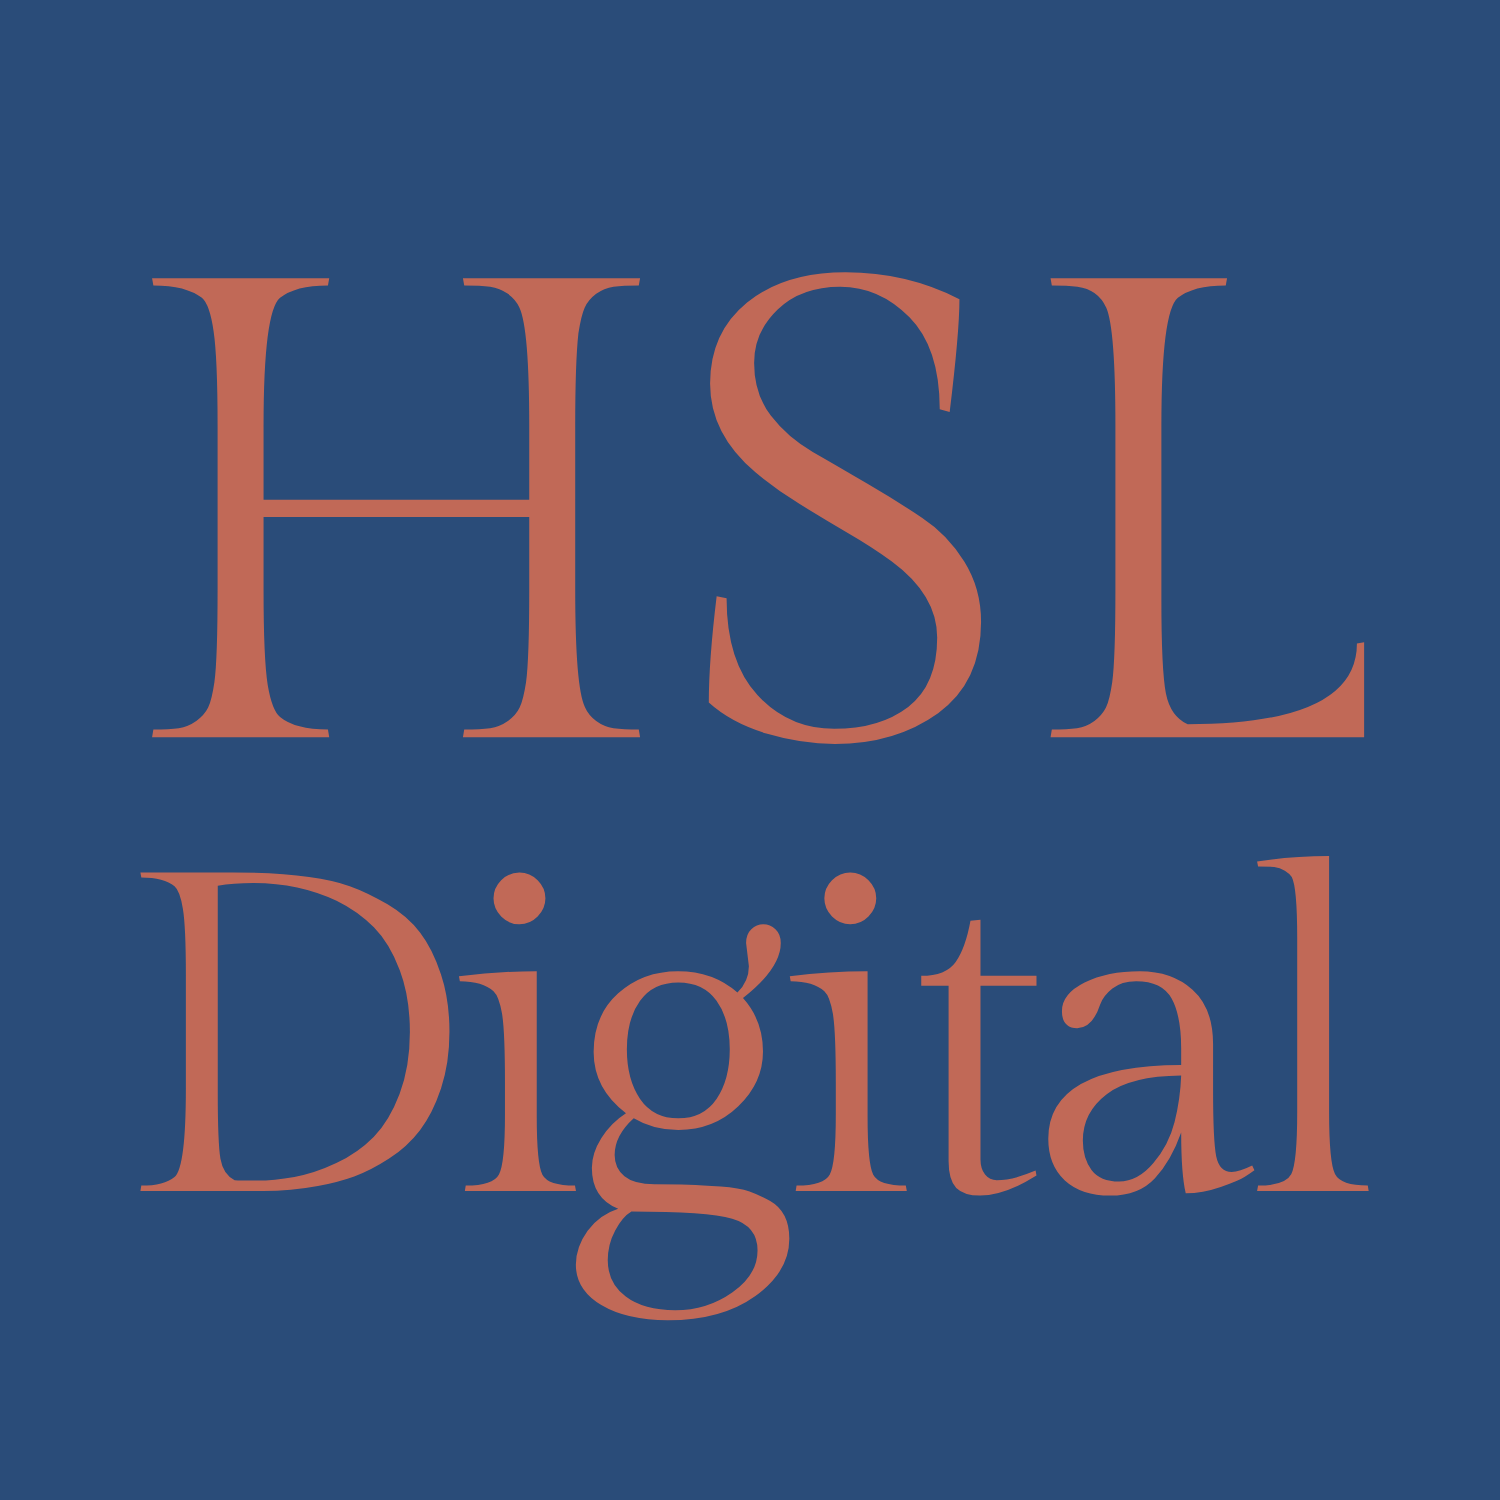 HSL Digital